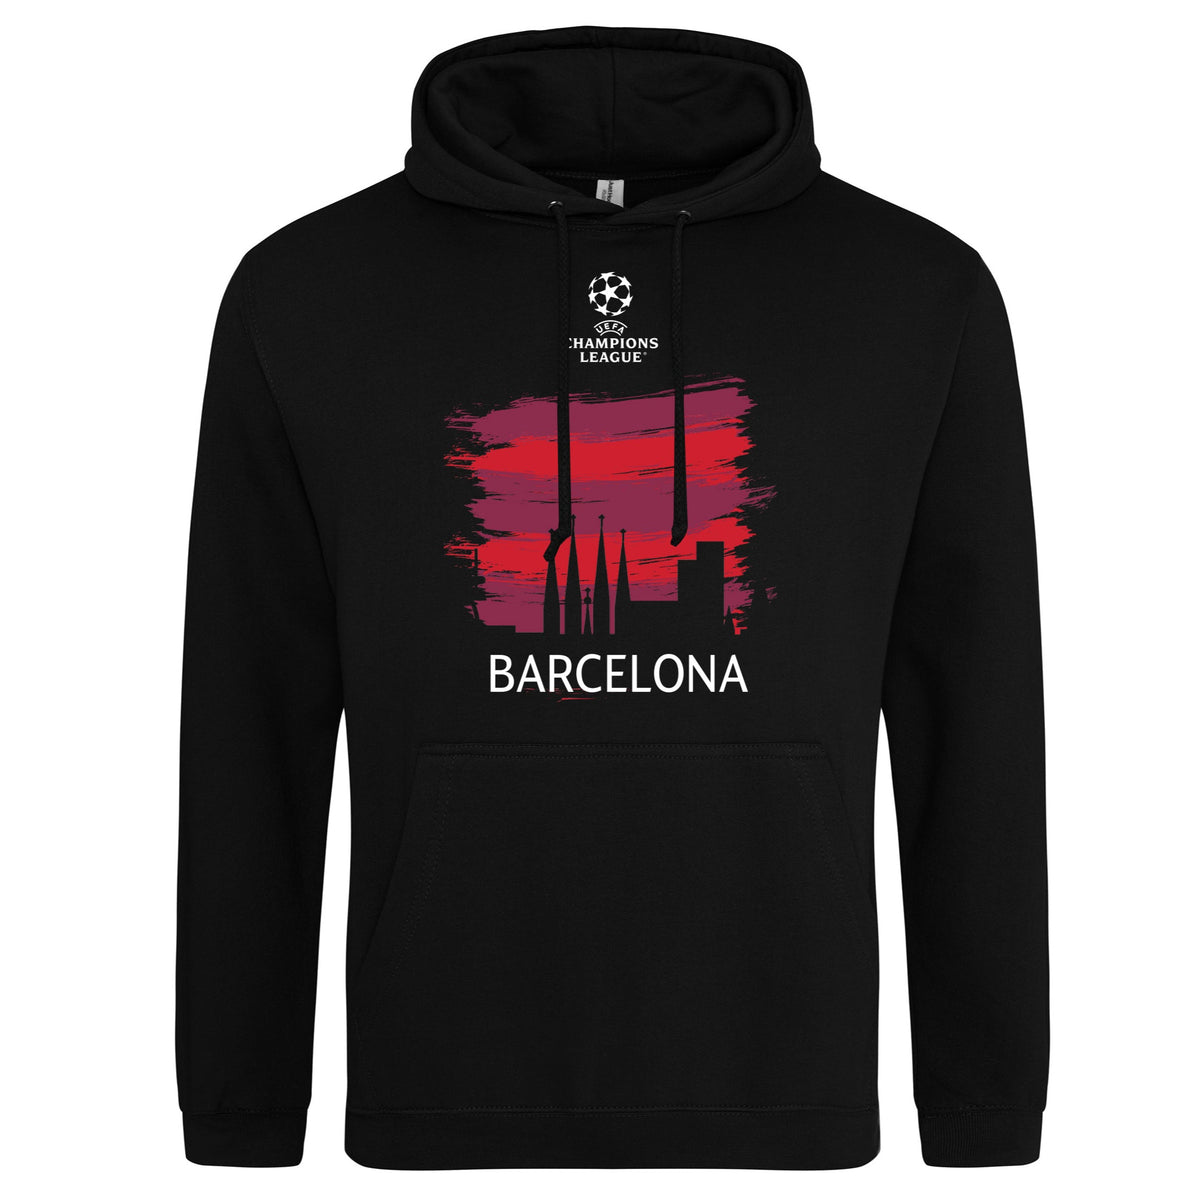 Champions League Barcelona City Painted Skyline Hoodie Black